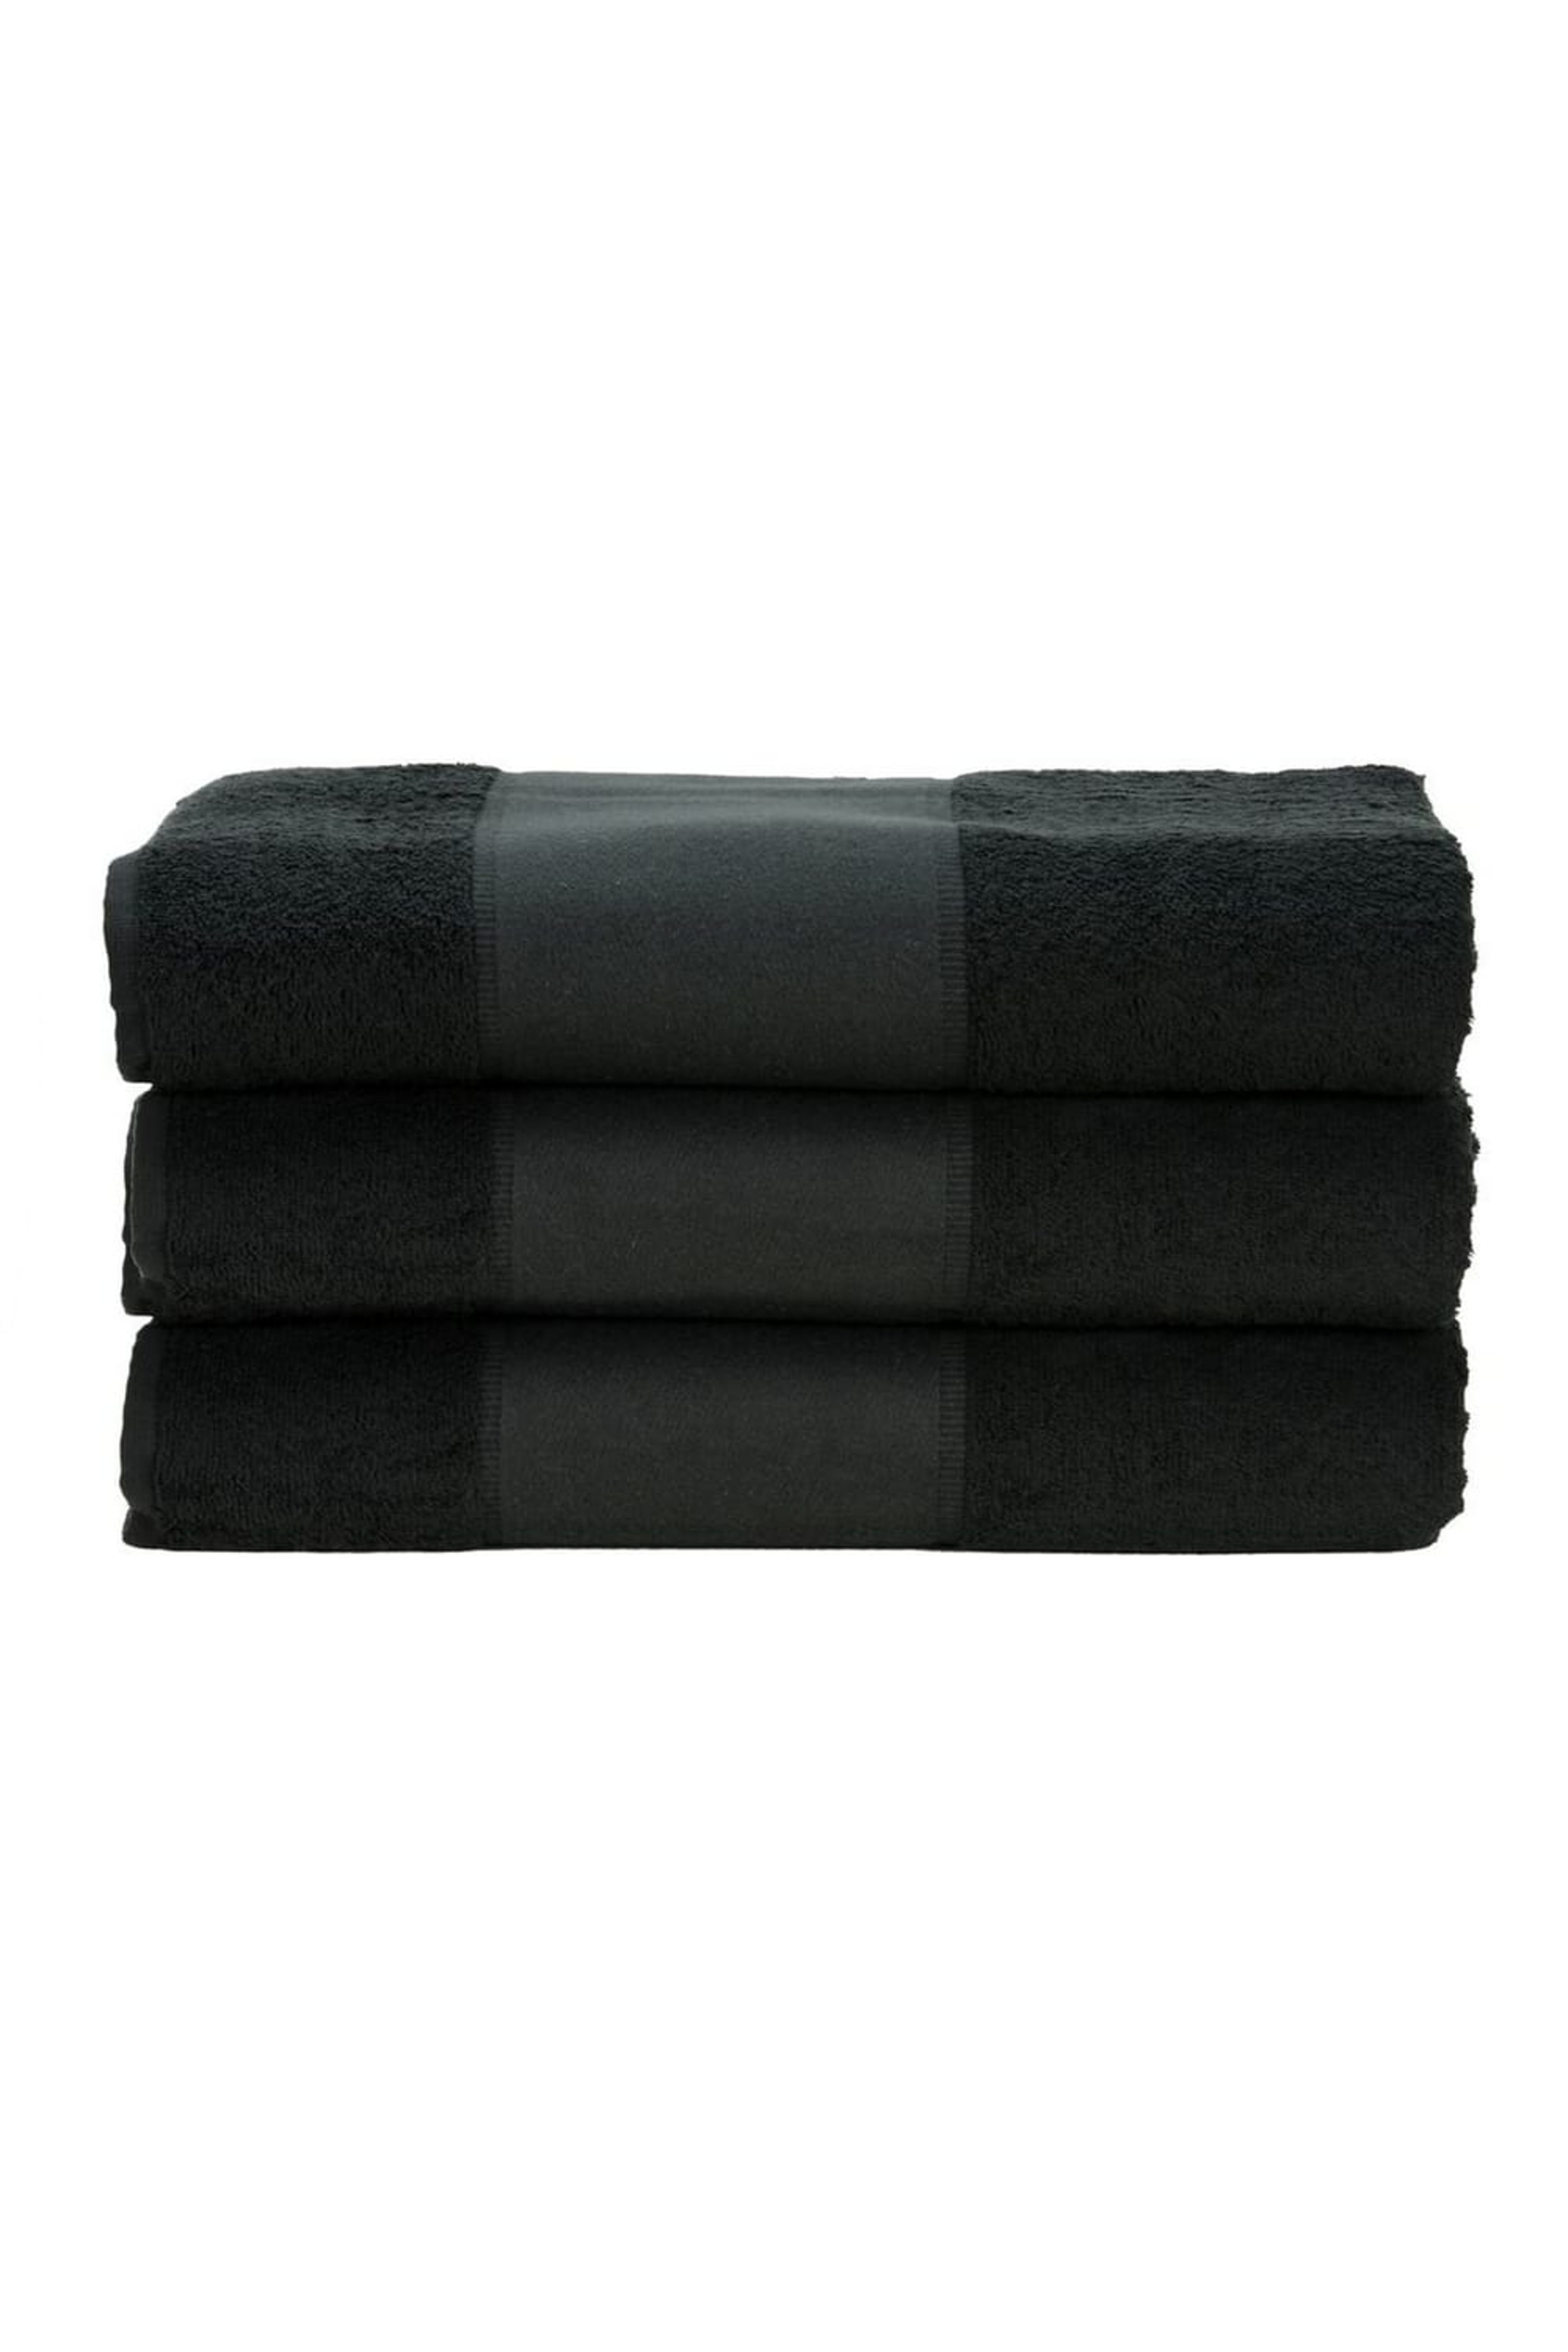 A&R TOWELS A&R TOWELS A&R TOWELS PRINT-ME HAND TOWEL (BLACK) (ONE SIZE)